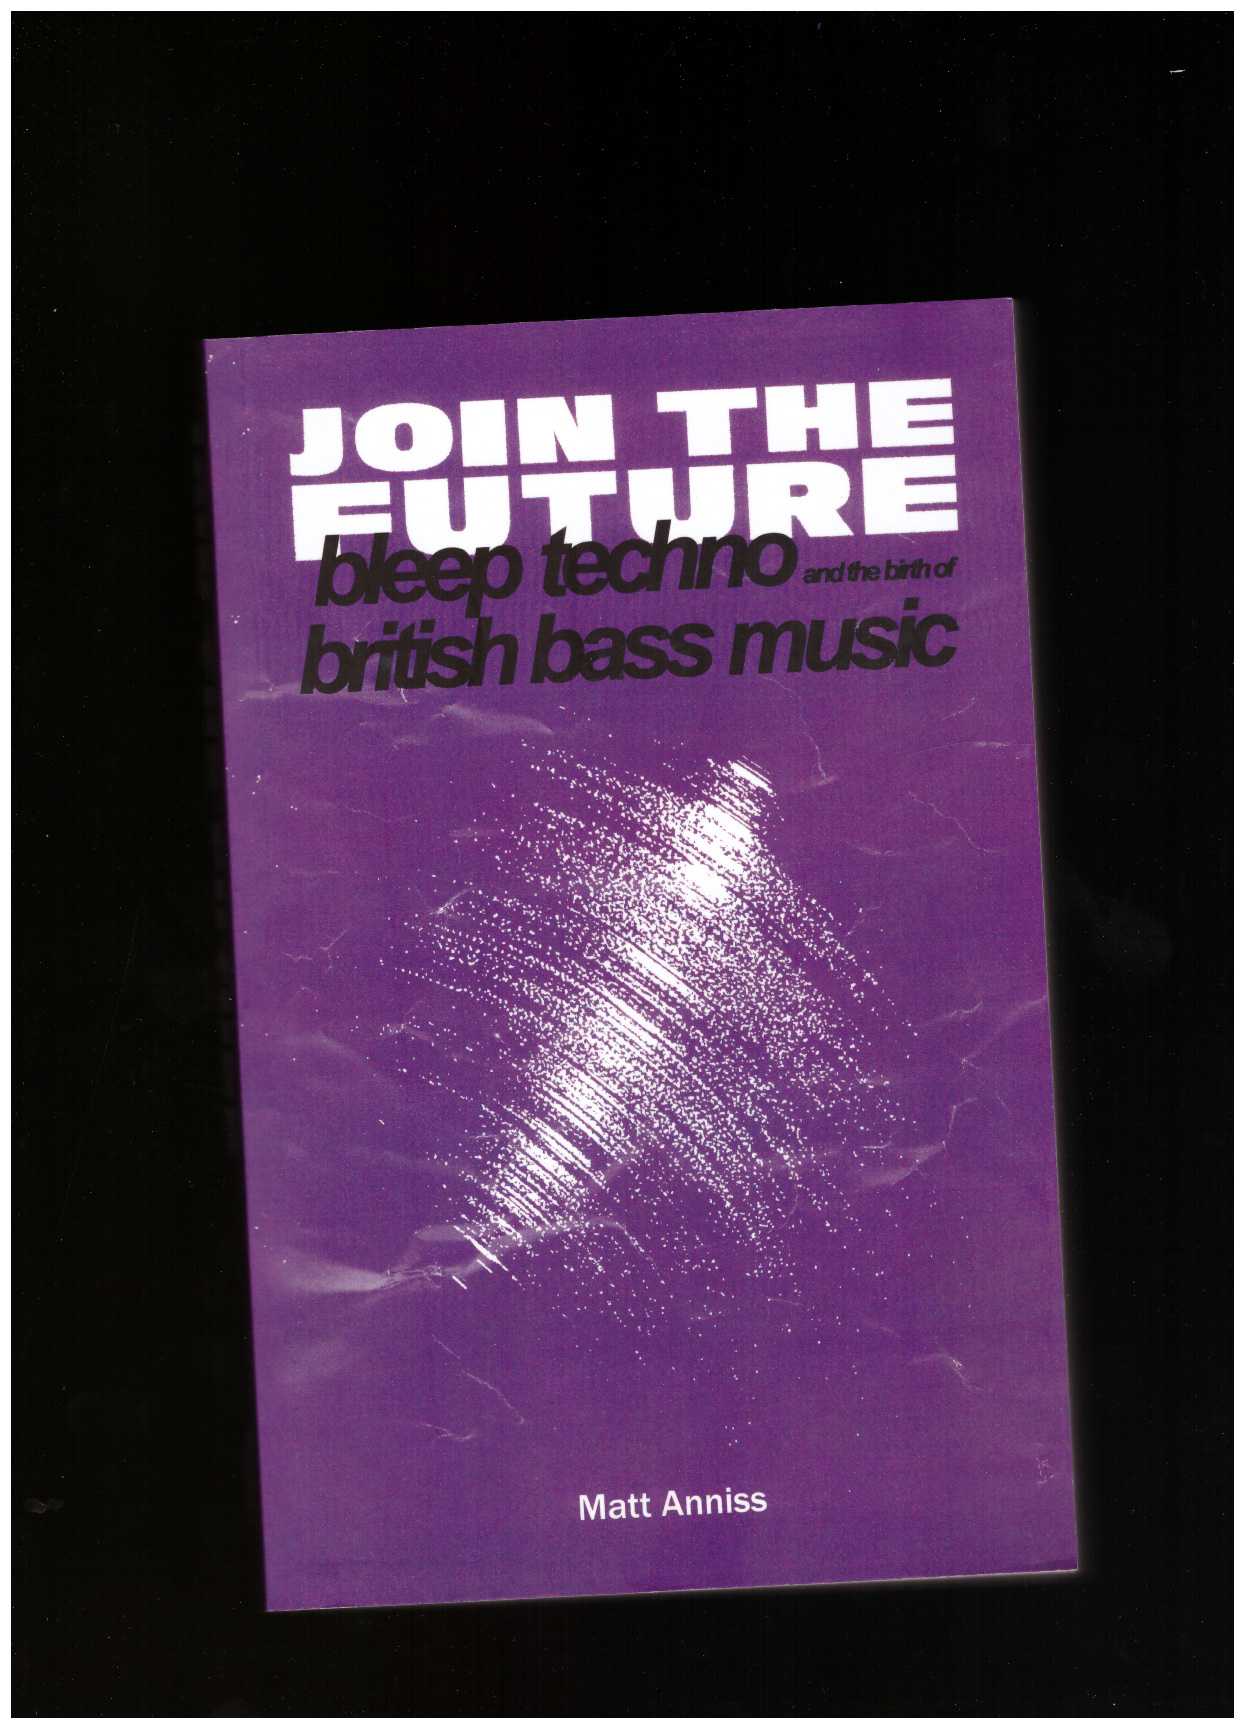 ANNISS, Matt - Join The Future: Bleep Techno & the Birth of British Bass Music